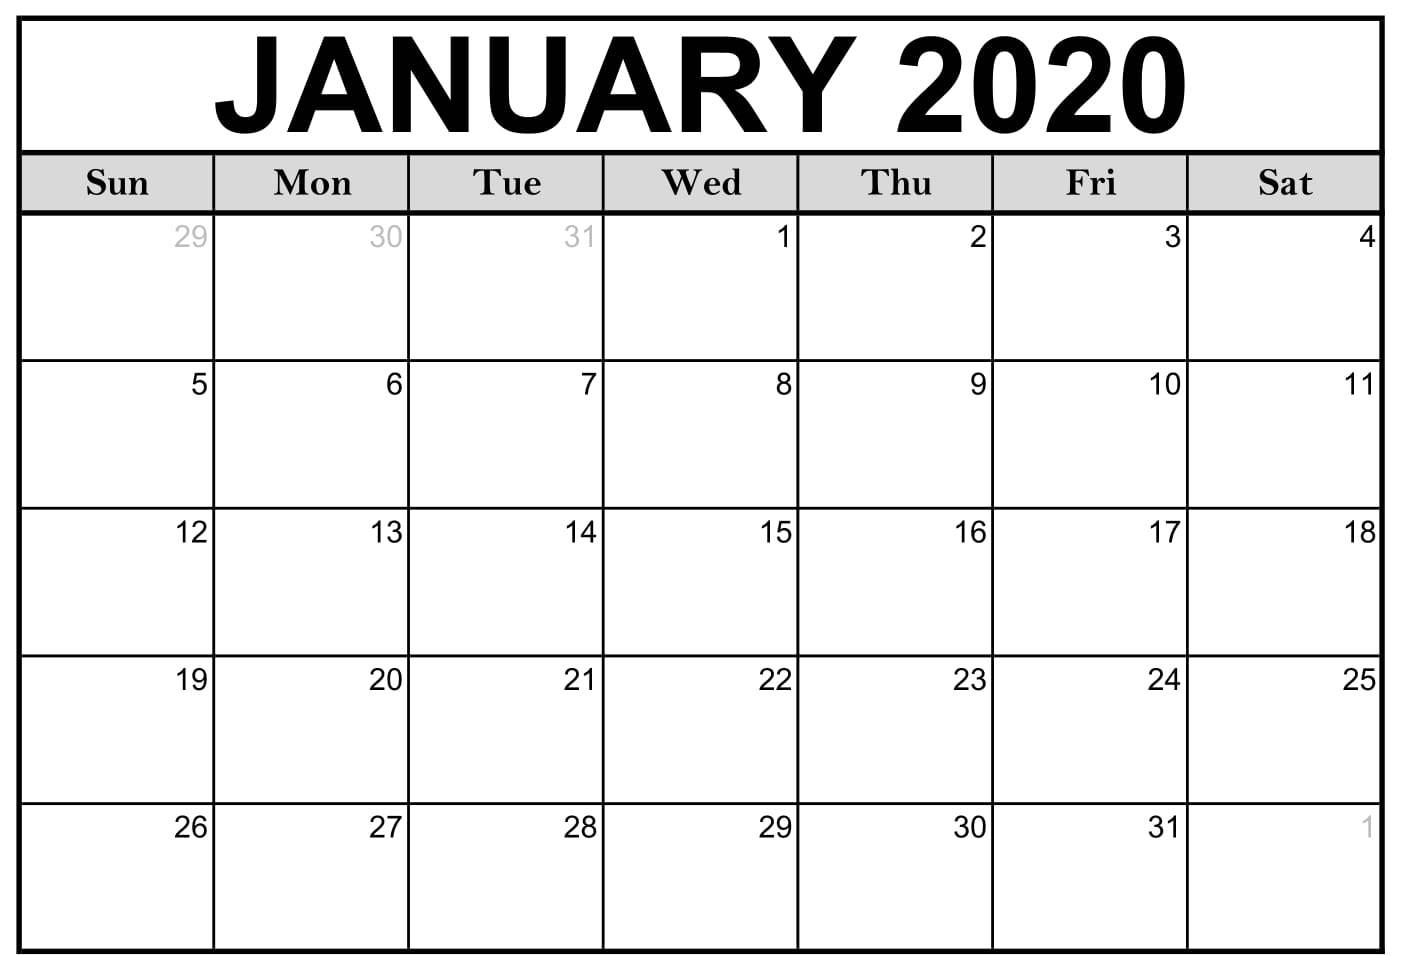 January Calendar 2020 Template - Togo.wpart.co